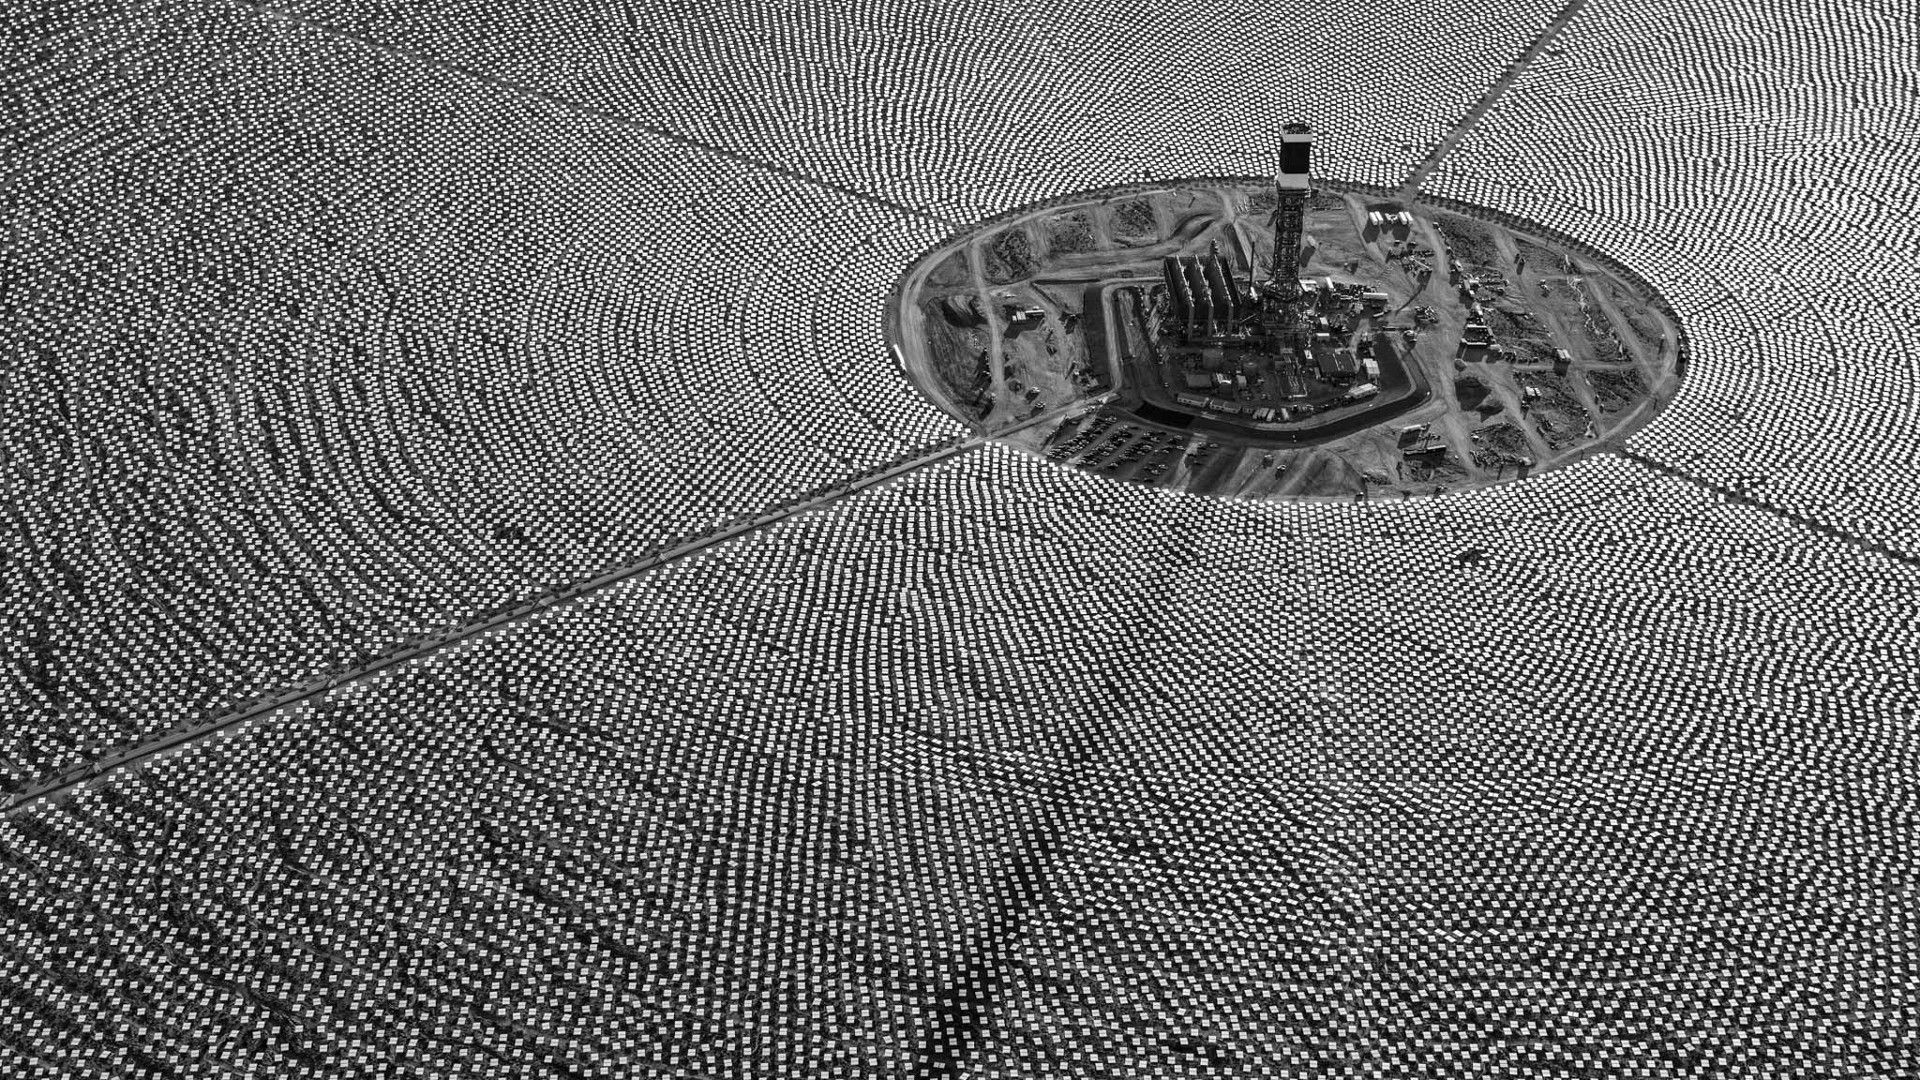 General 1920x1080 solar power power plant Dubai United Arab Emirates landscape aerial view monochrome